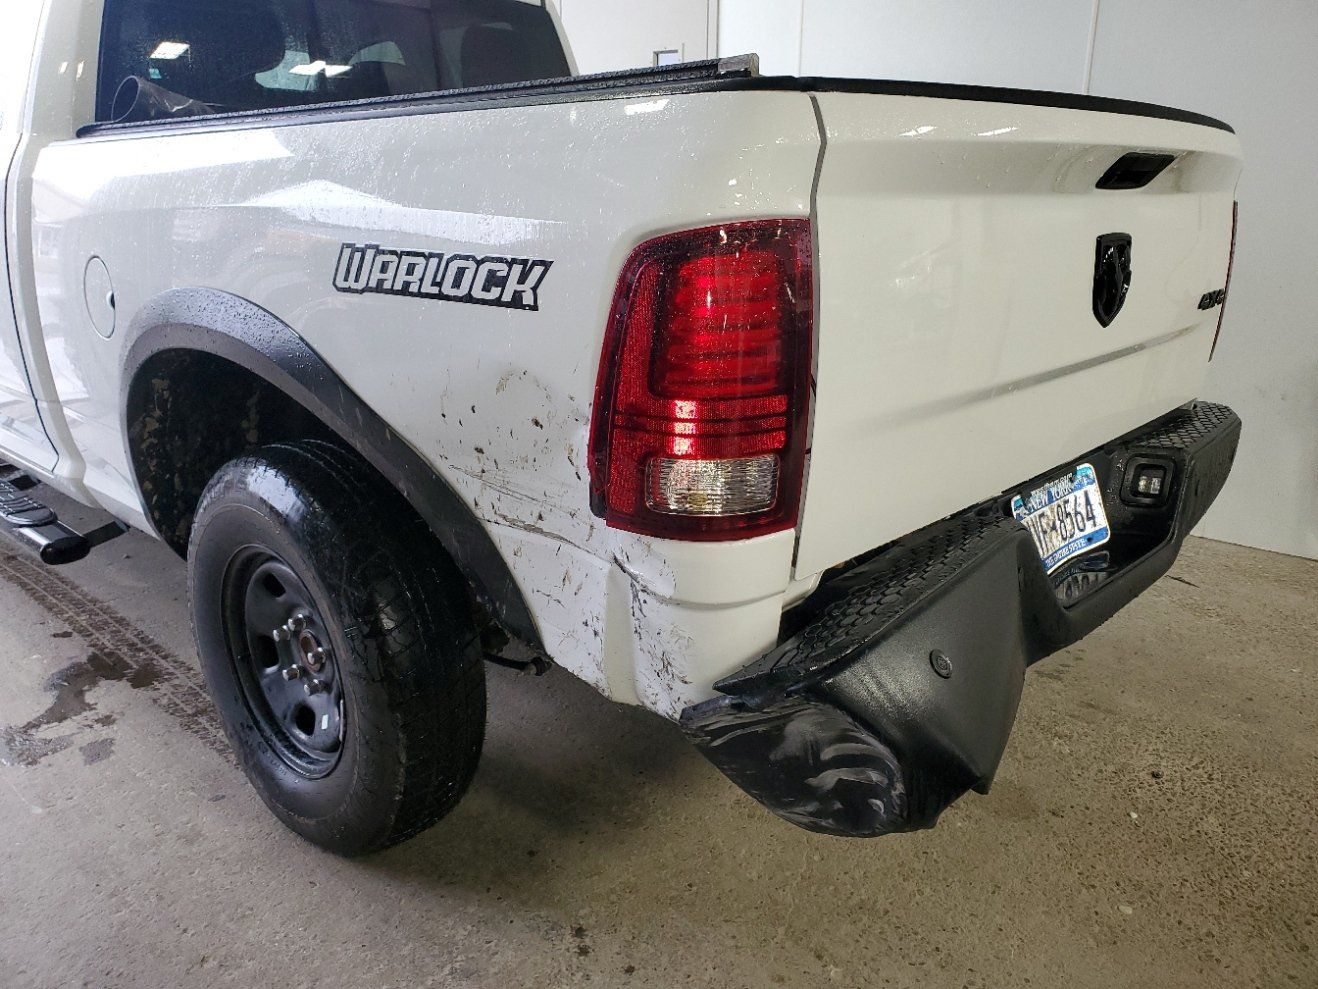 damaged truck bumper and bedside